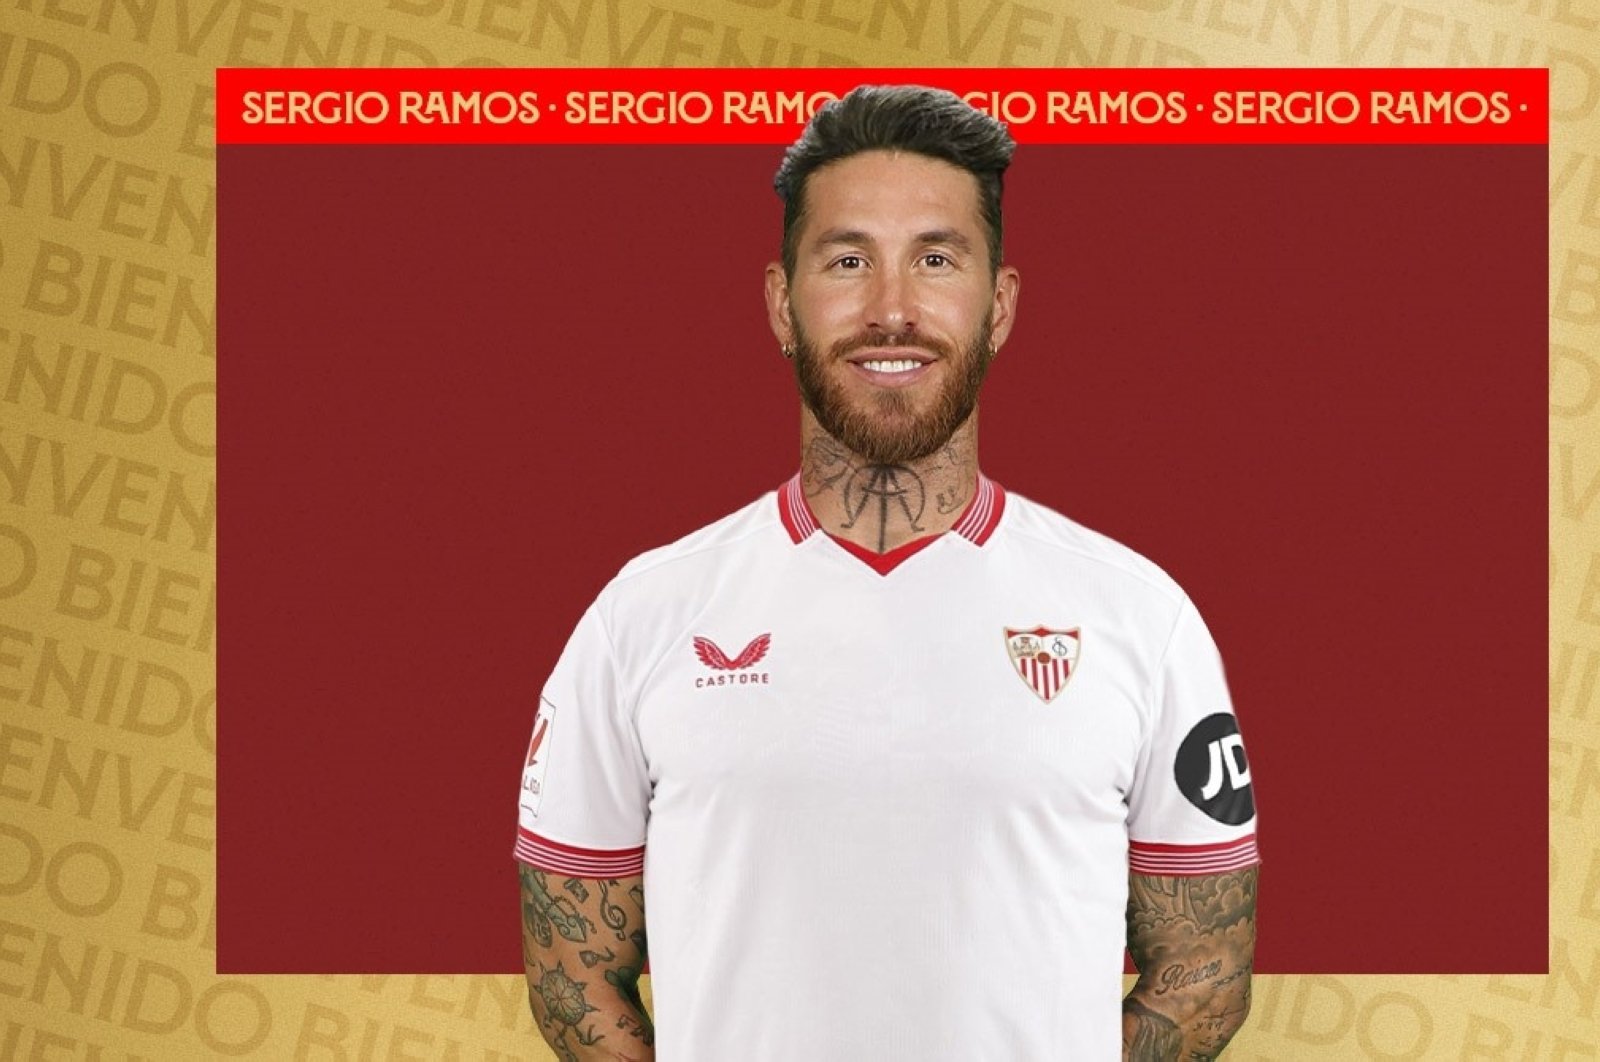 Ramos signs for boyhood club Sevilla despite Turkish, Saudi interests